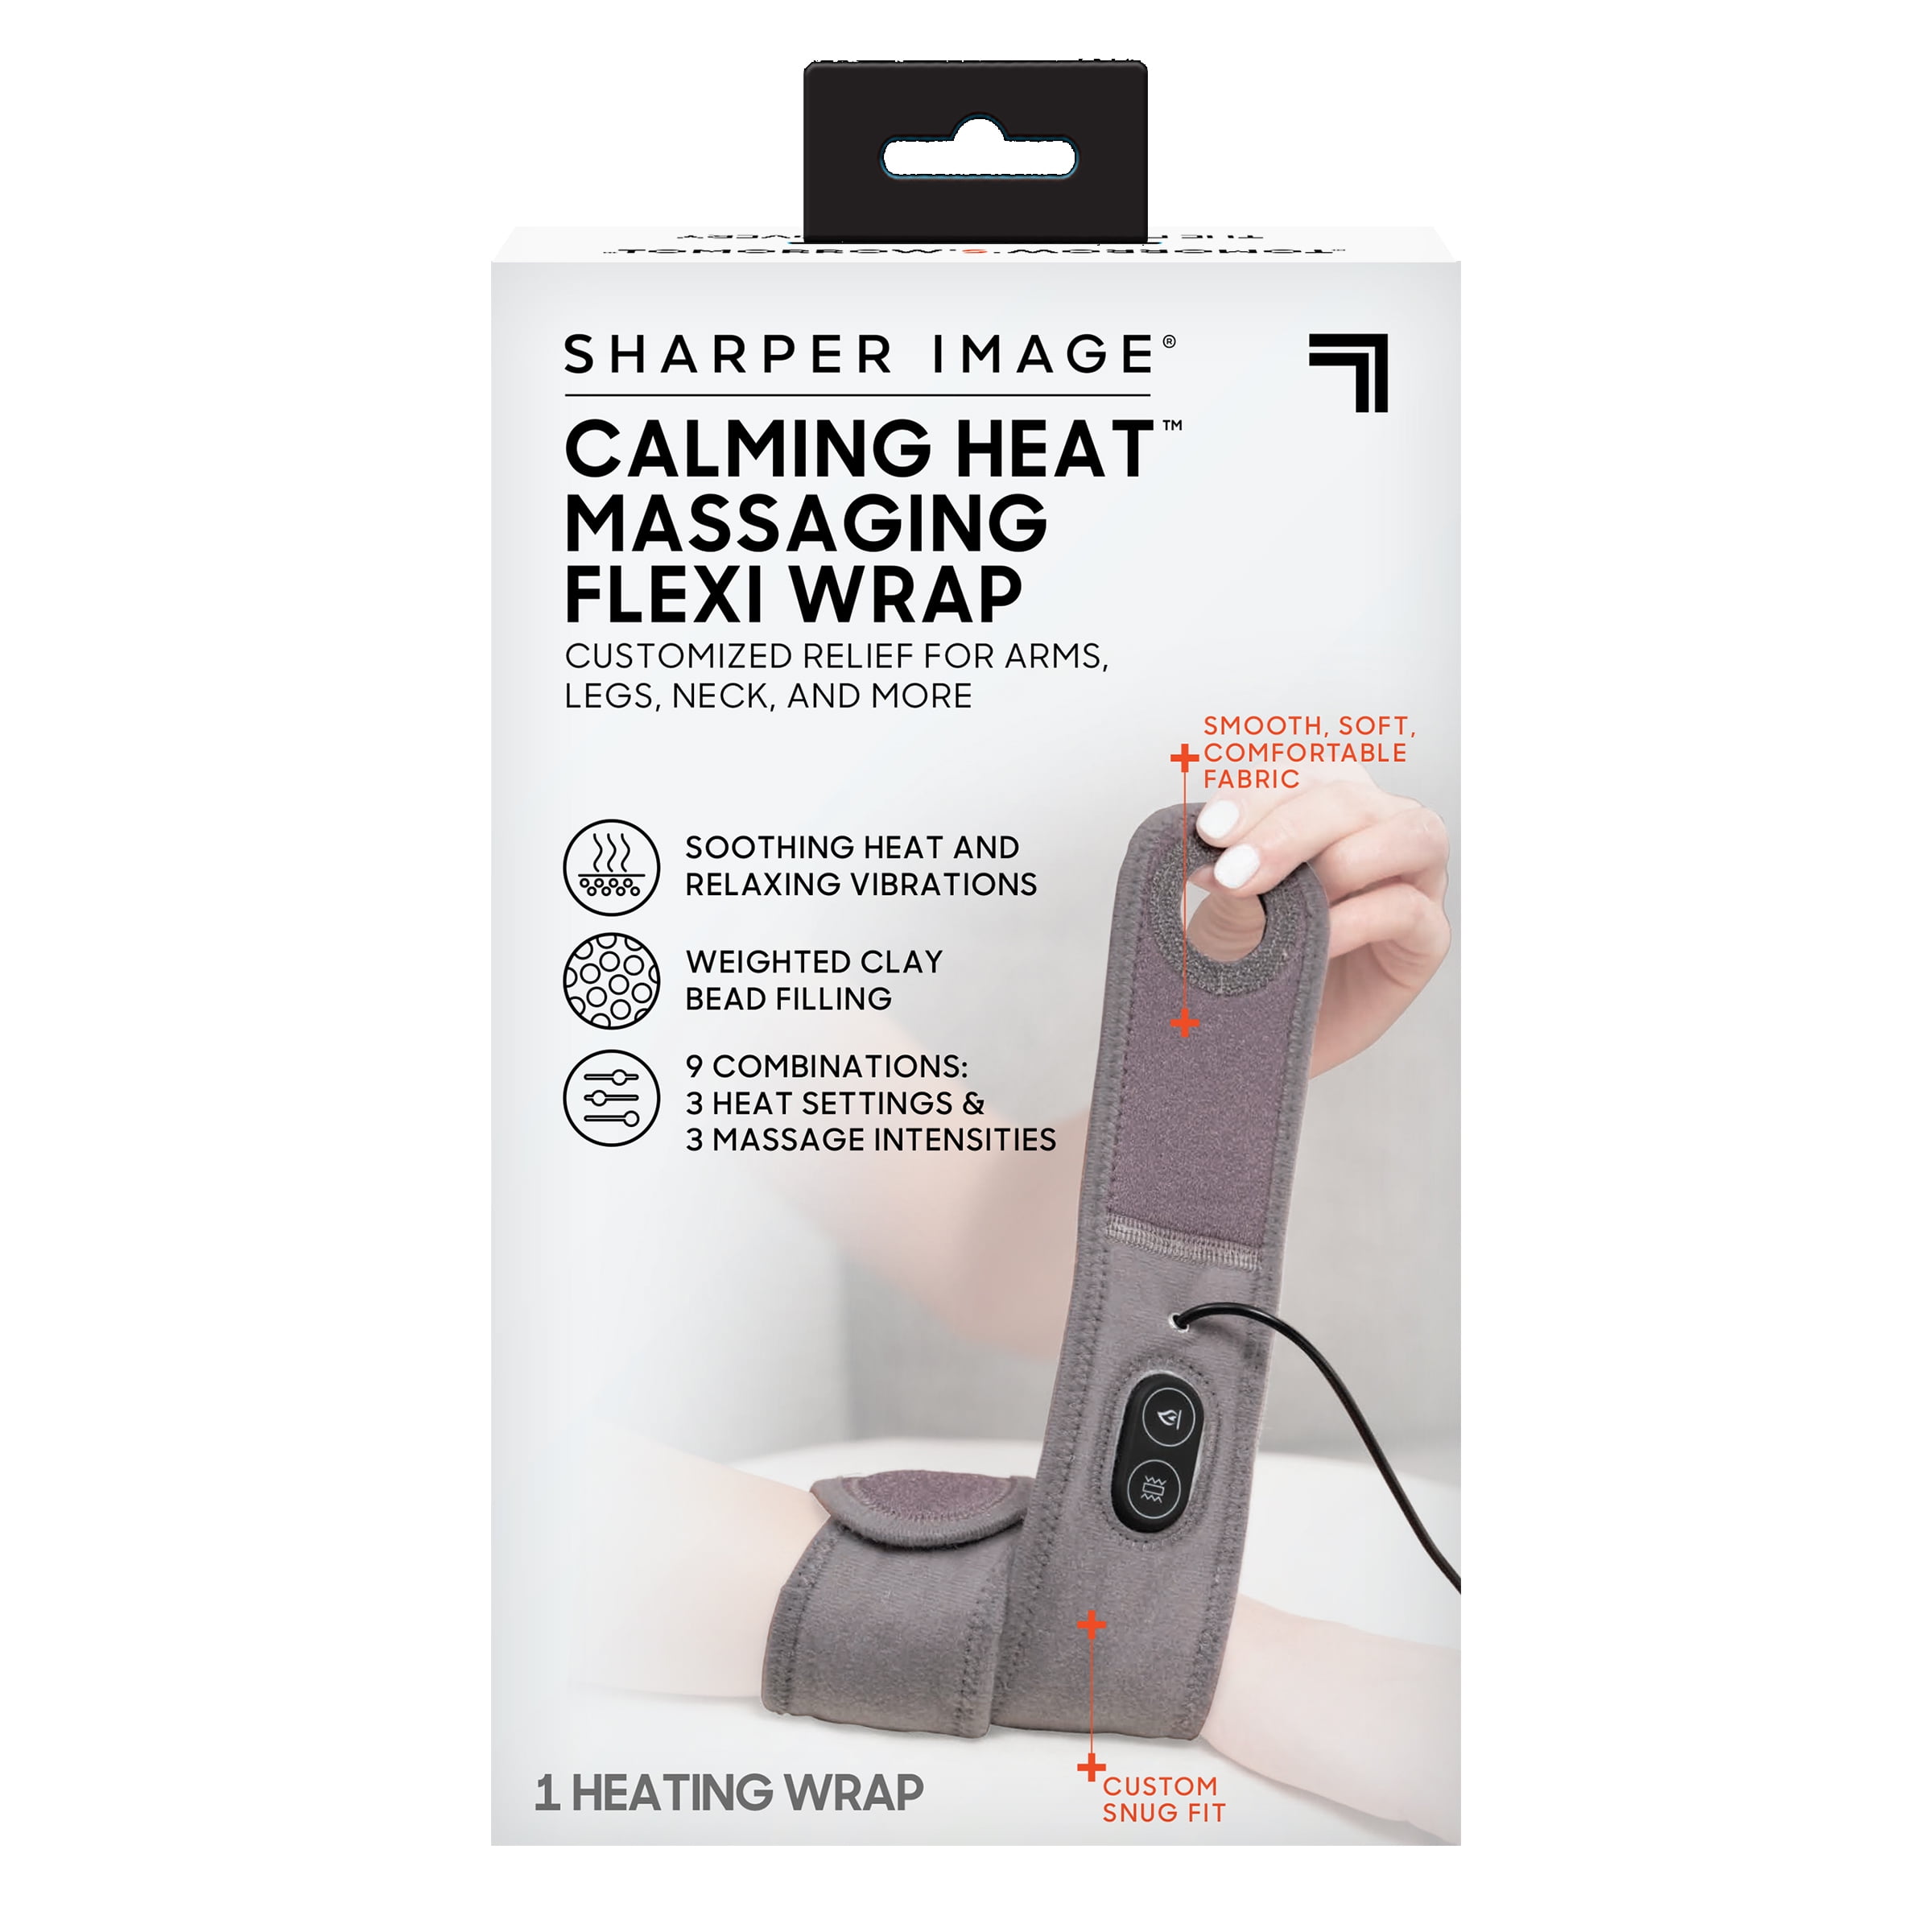 Sharper Image Calming Heat Neck Wrap with Heat & Massage 